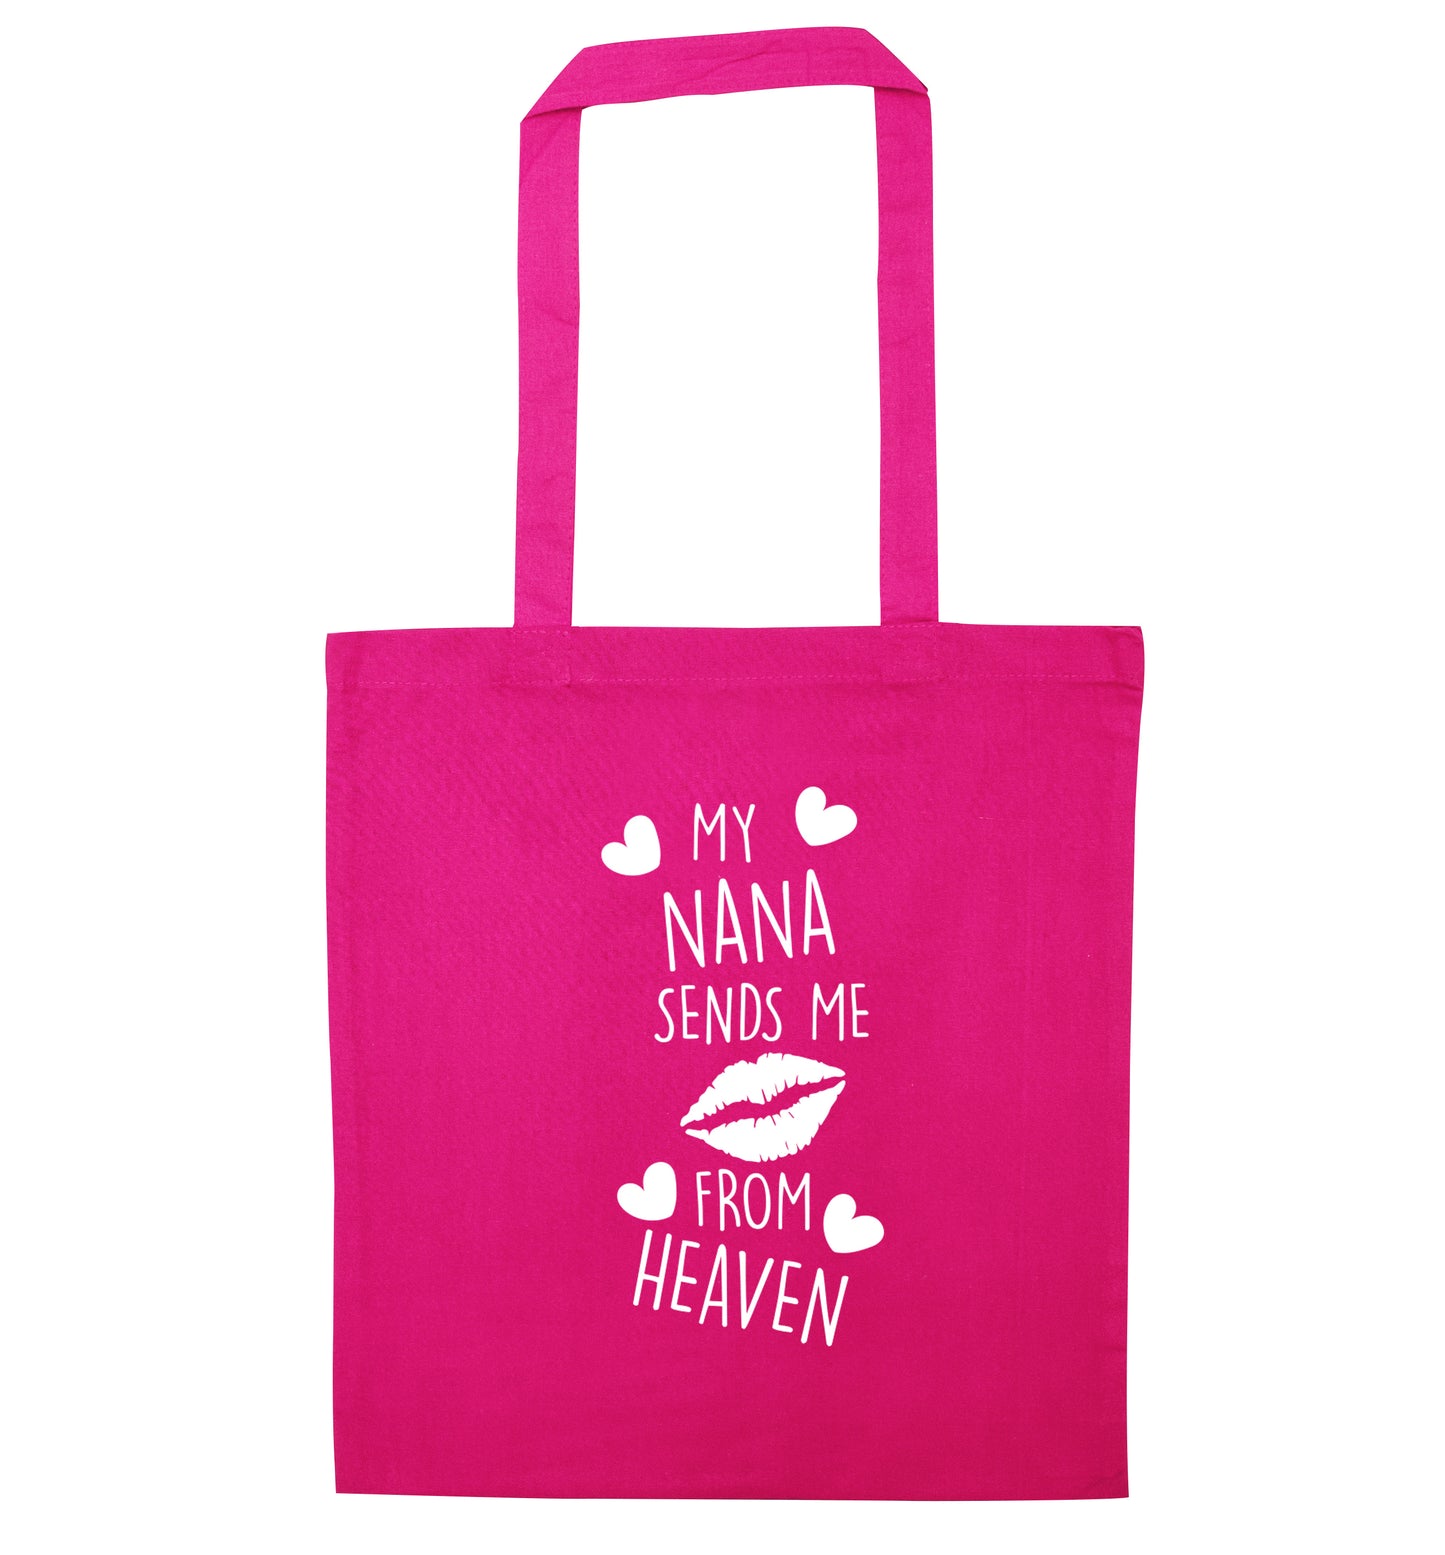 My nana sends me kisses from heaven pink tote bag